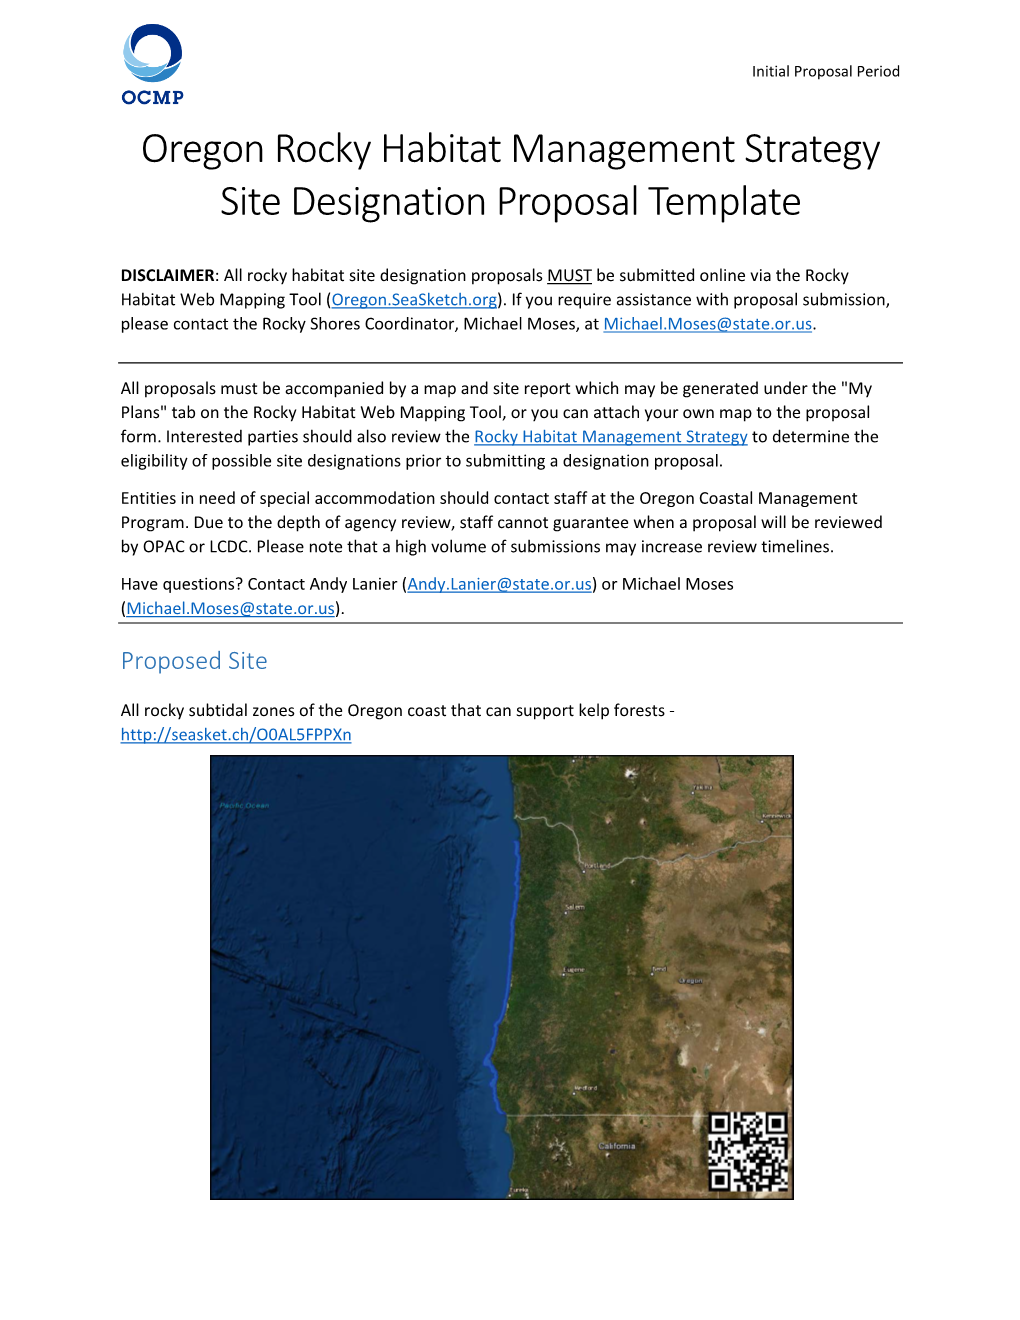 Oregon Rocky Habitat Management Strategy Site Designation Proposal Template